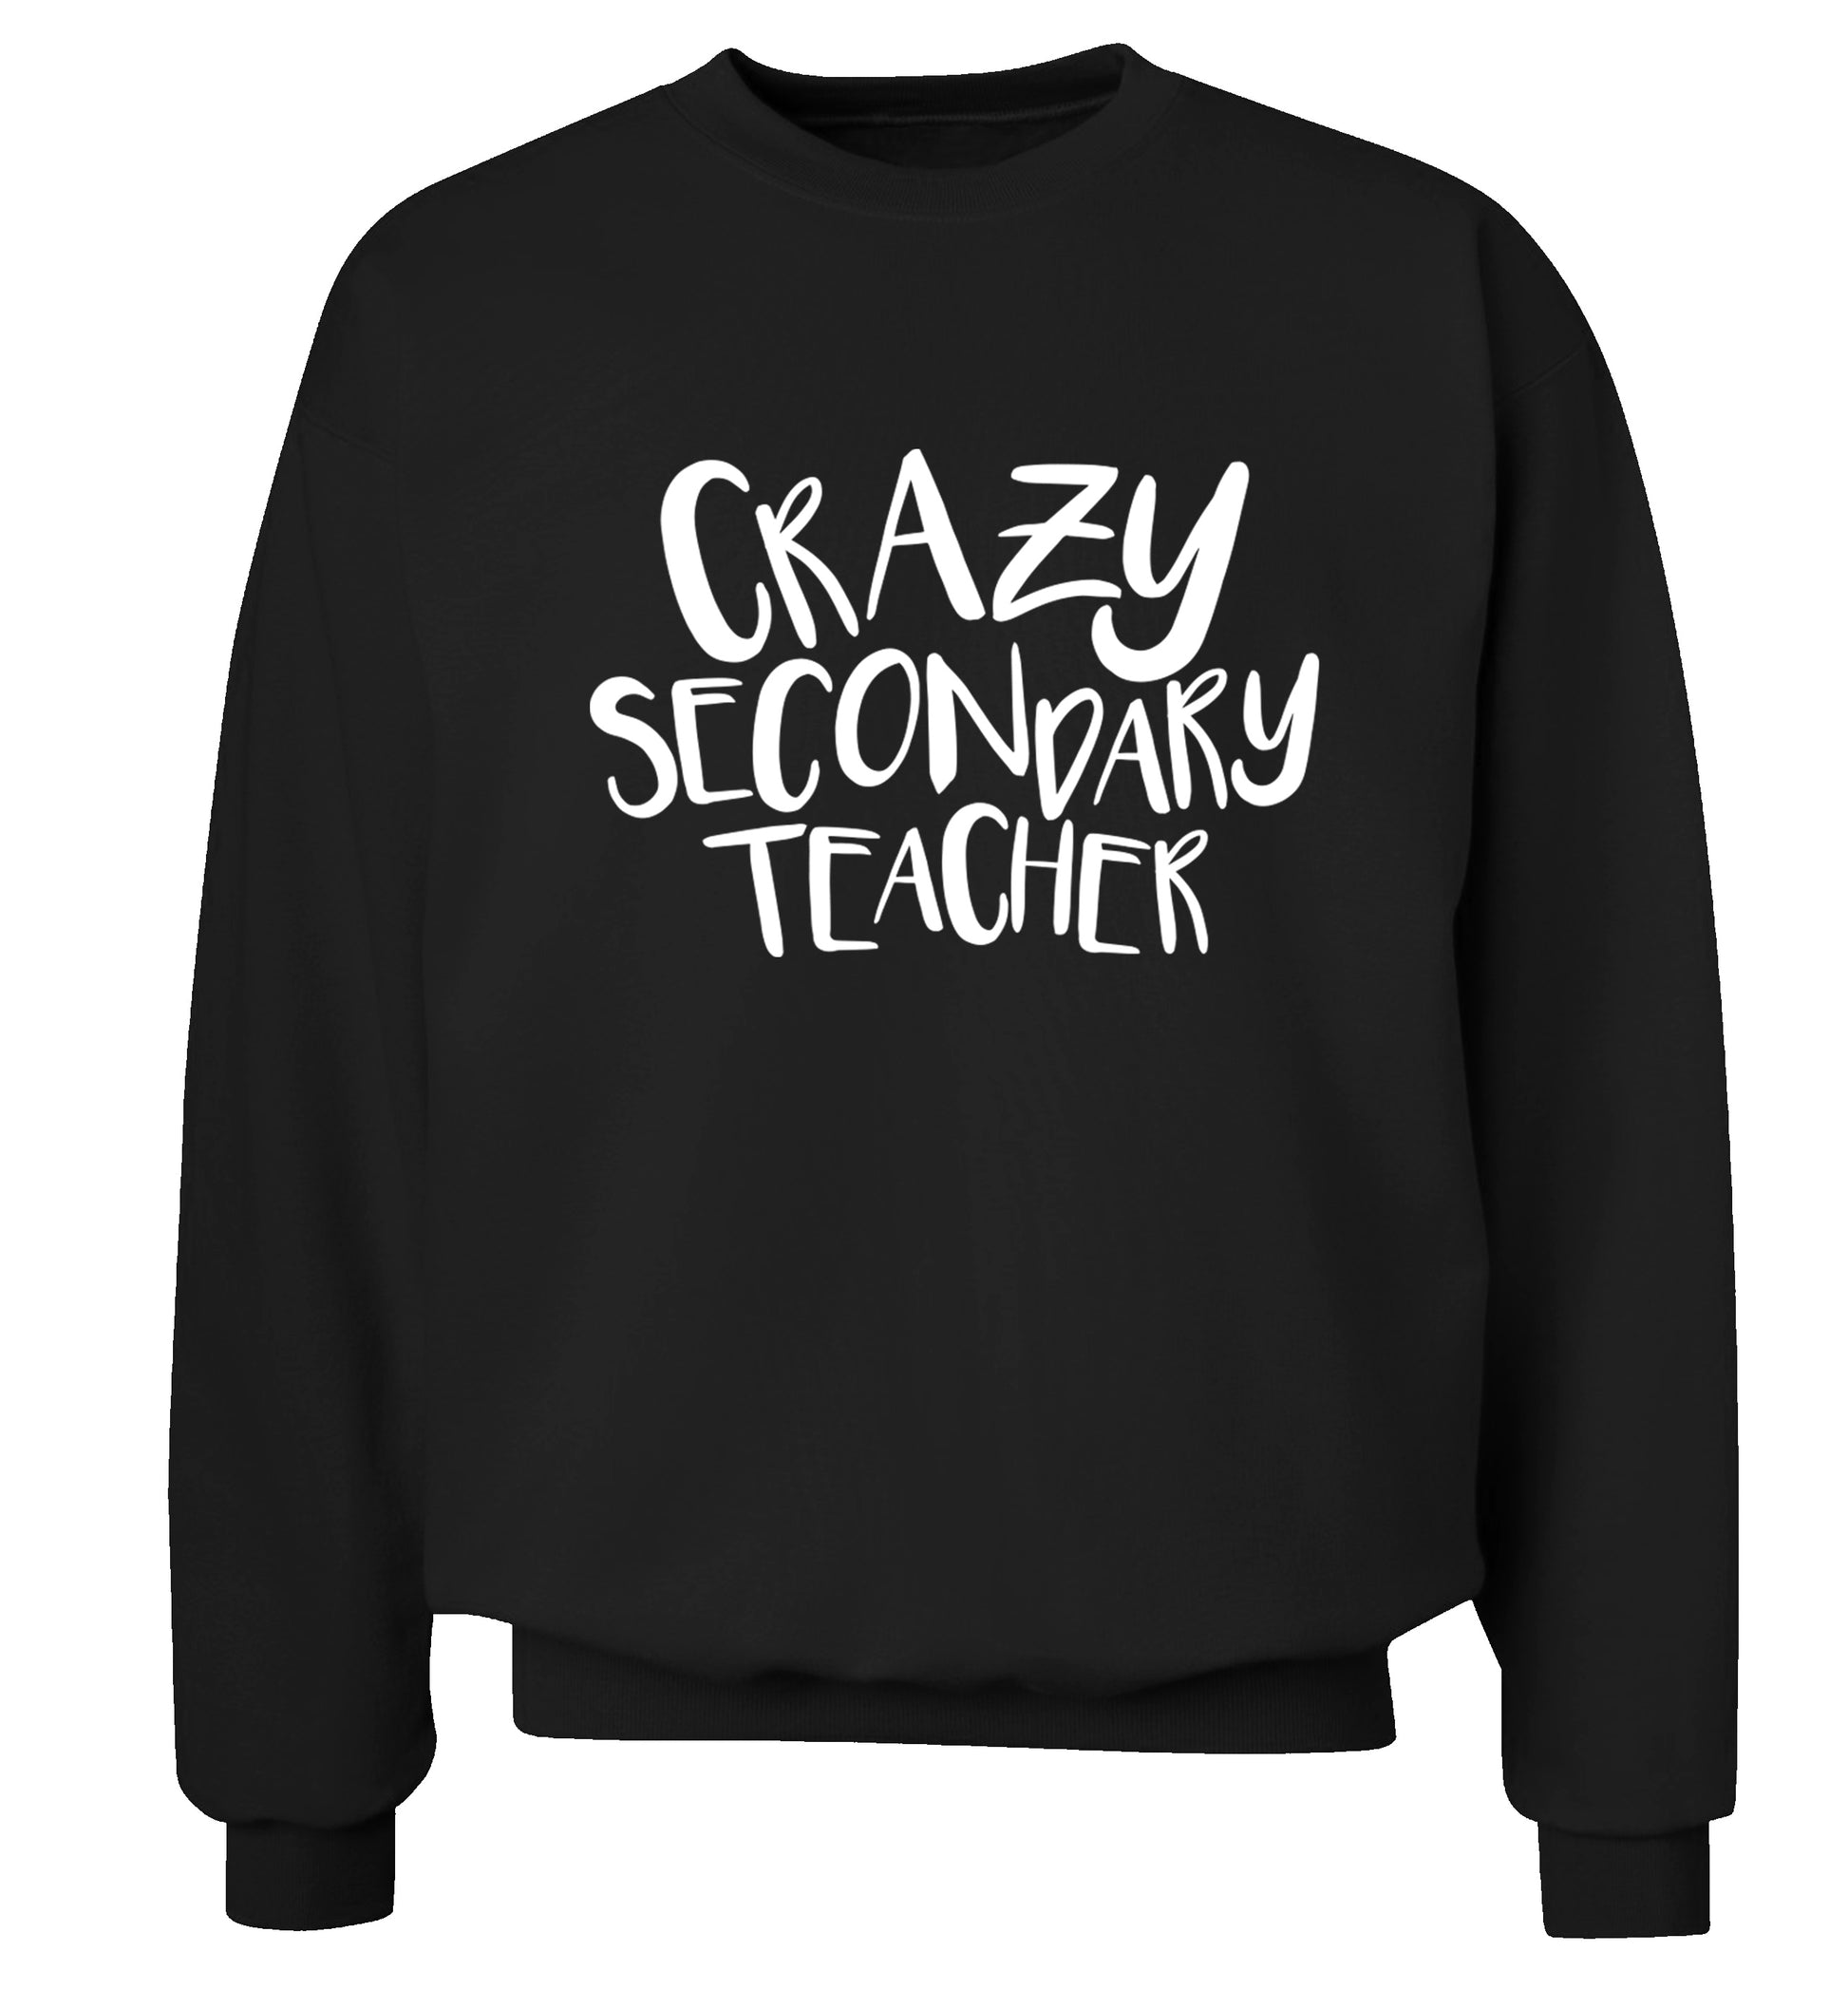 Crazy secondary teacher Adult's unisex black Sweater 2XL